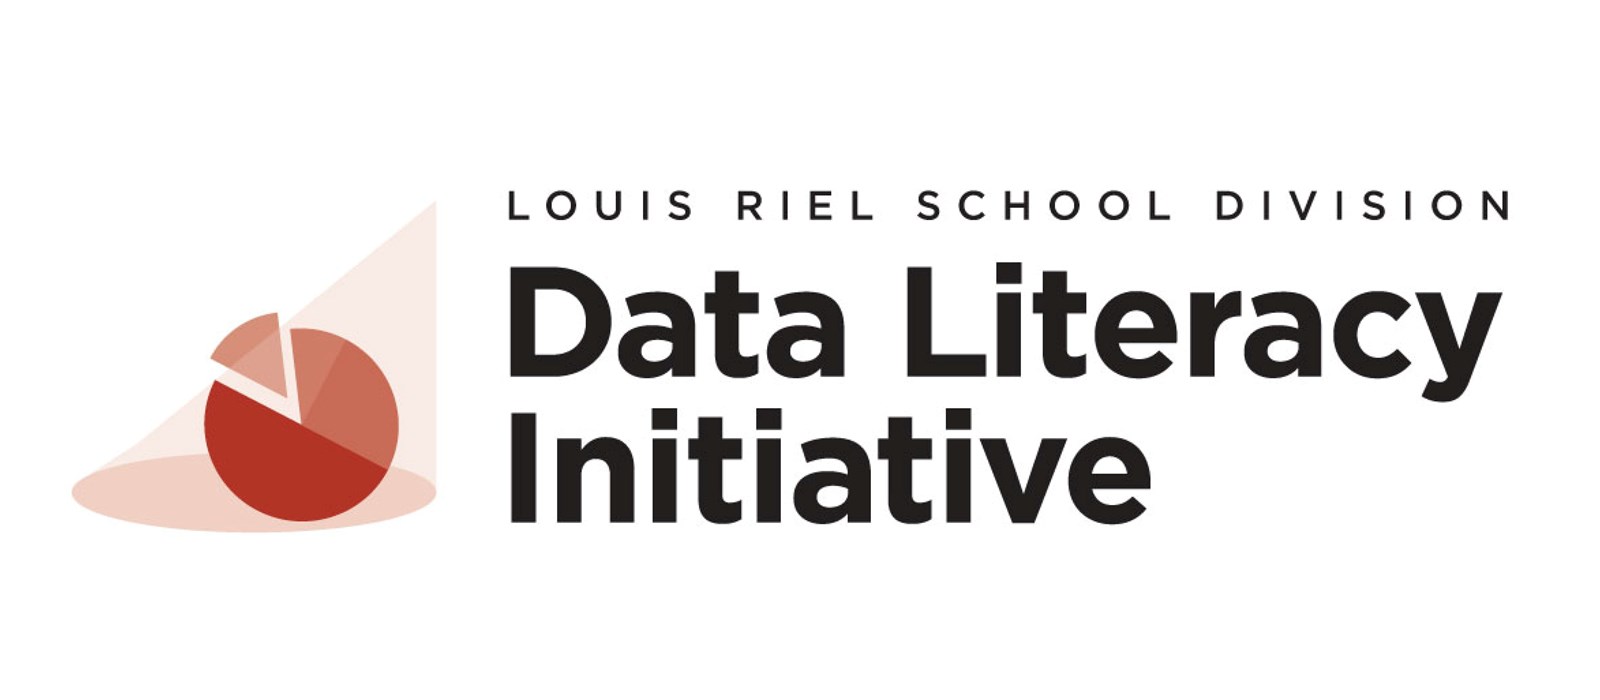 甜心直播's Data Literacy Initiative logo